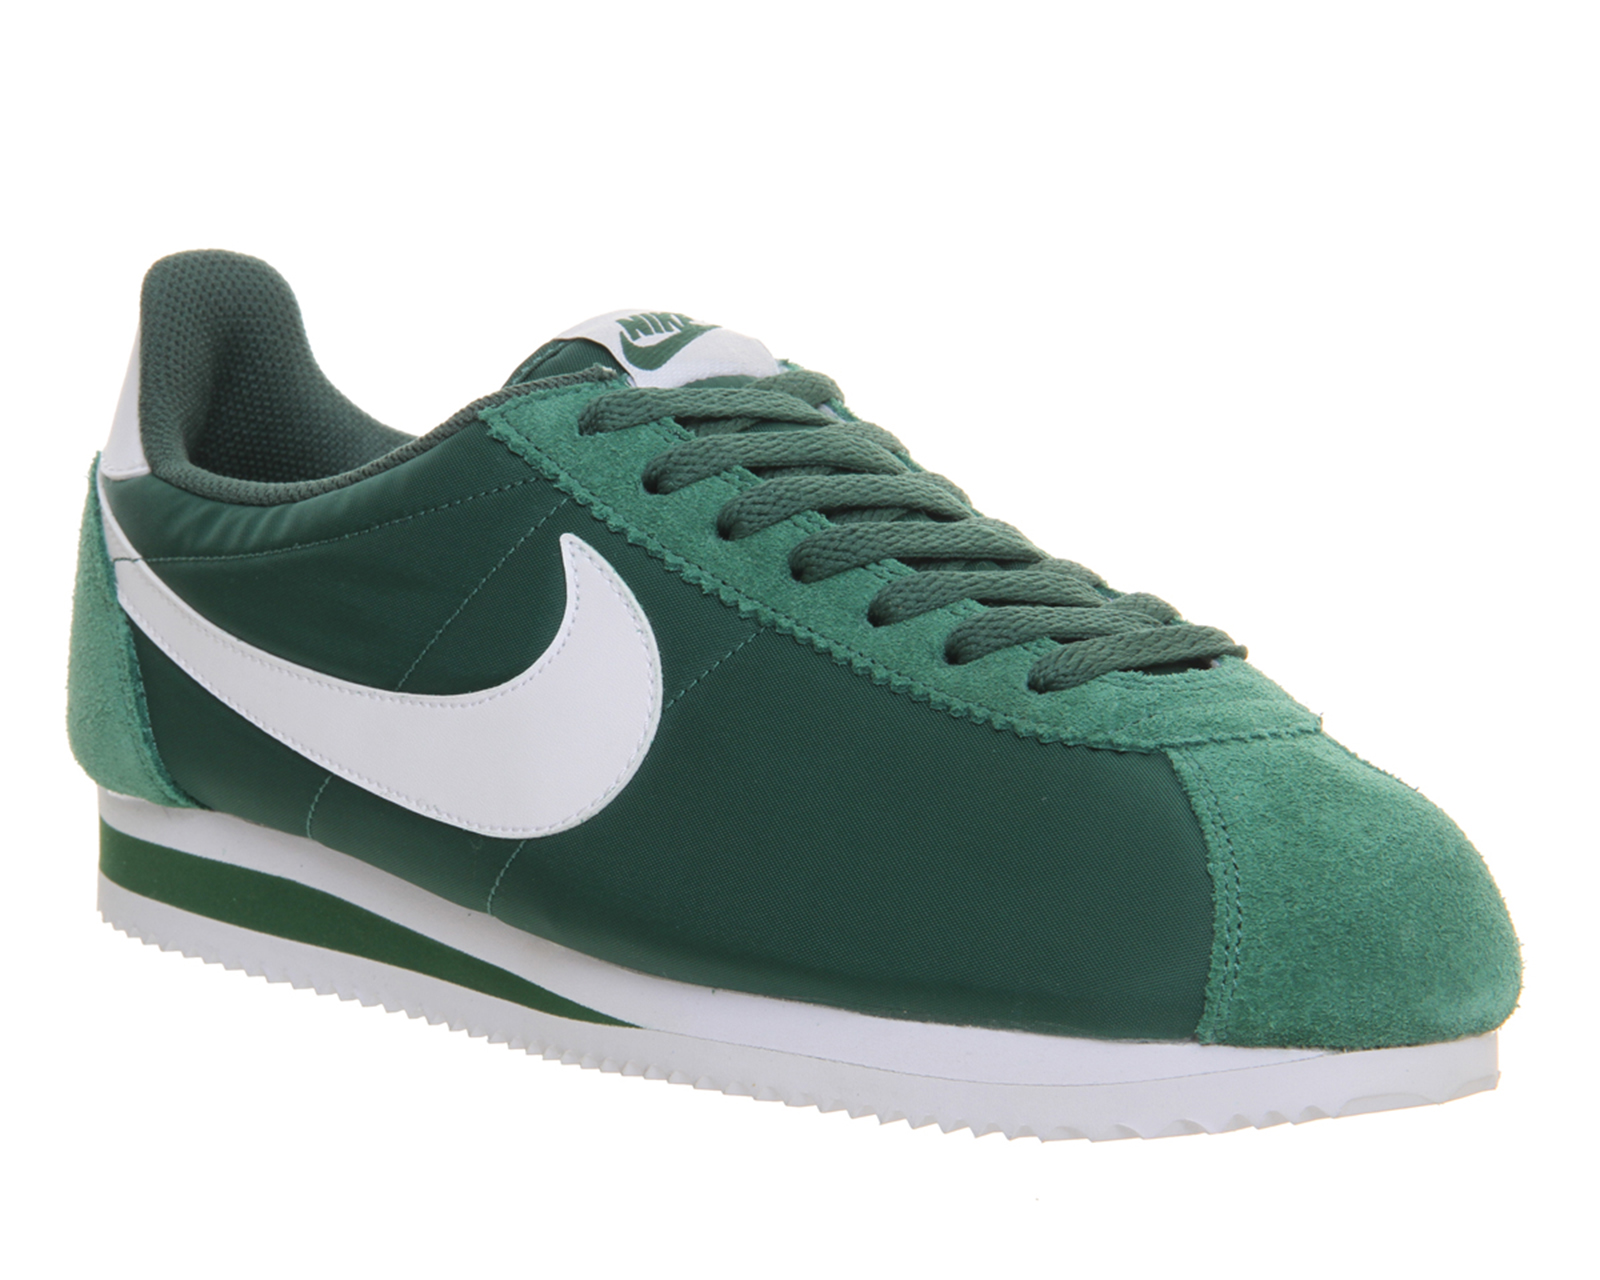 NikeCortez NylonGreen Green